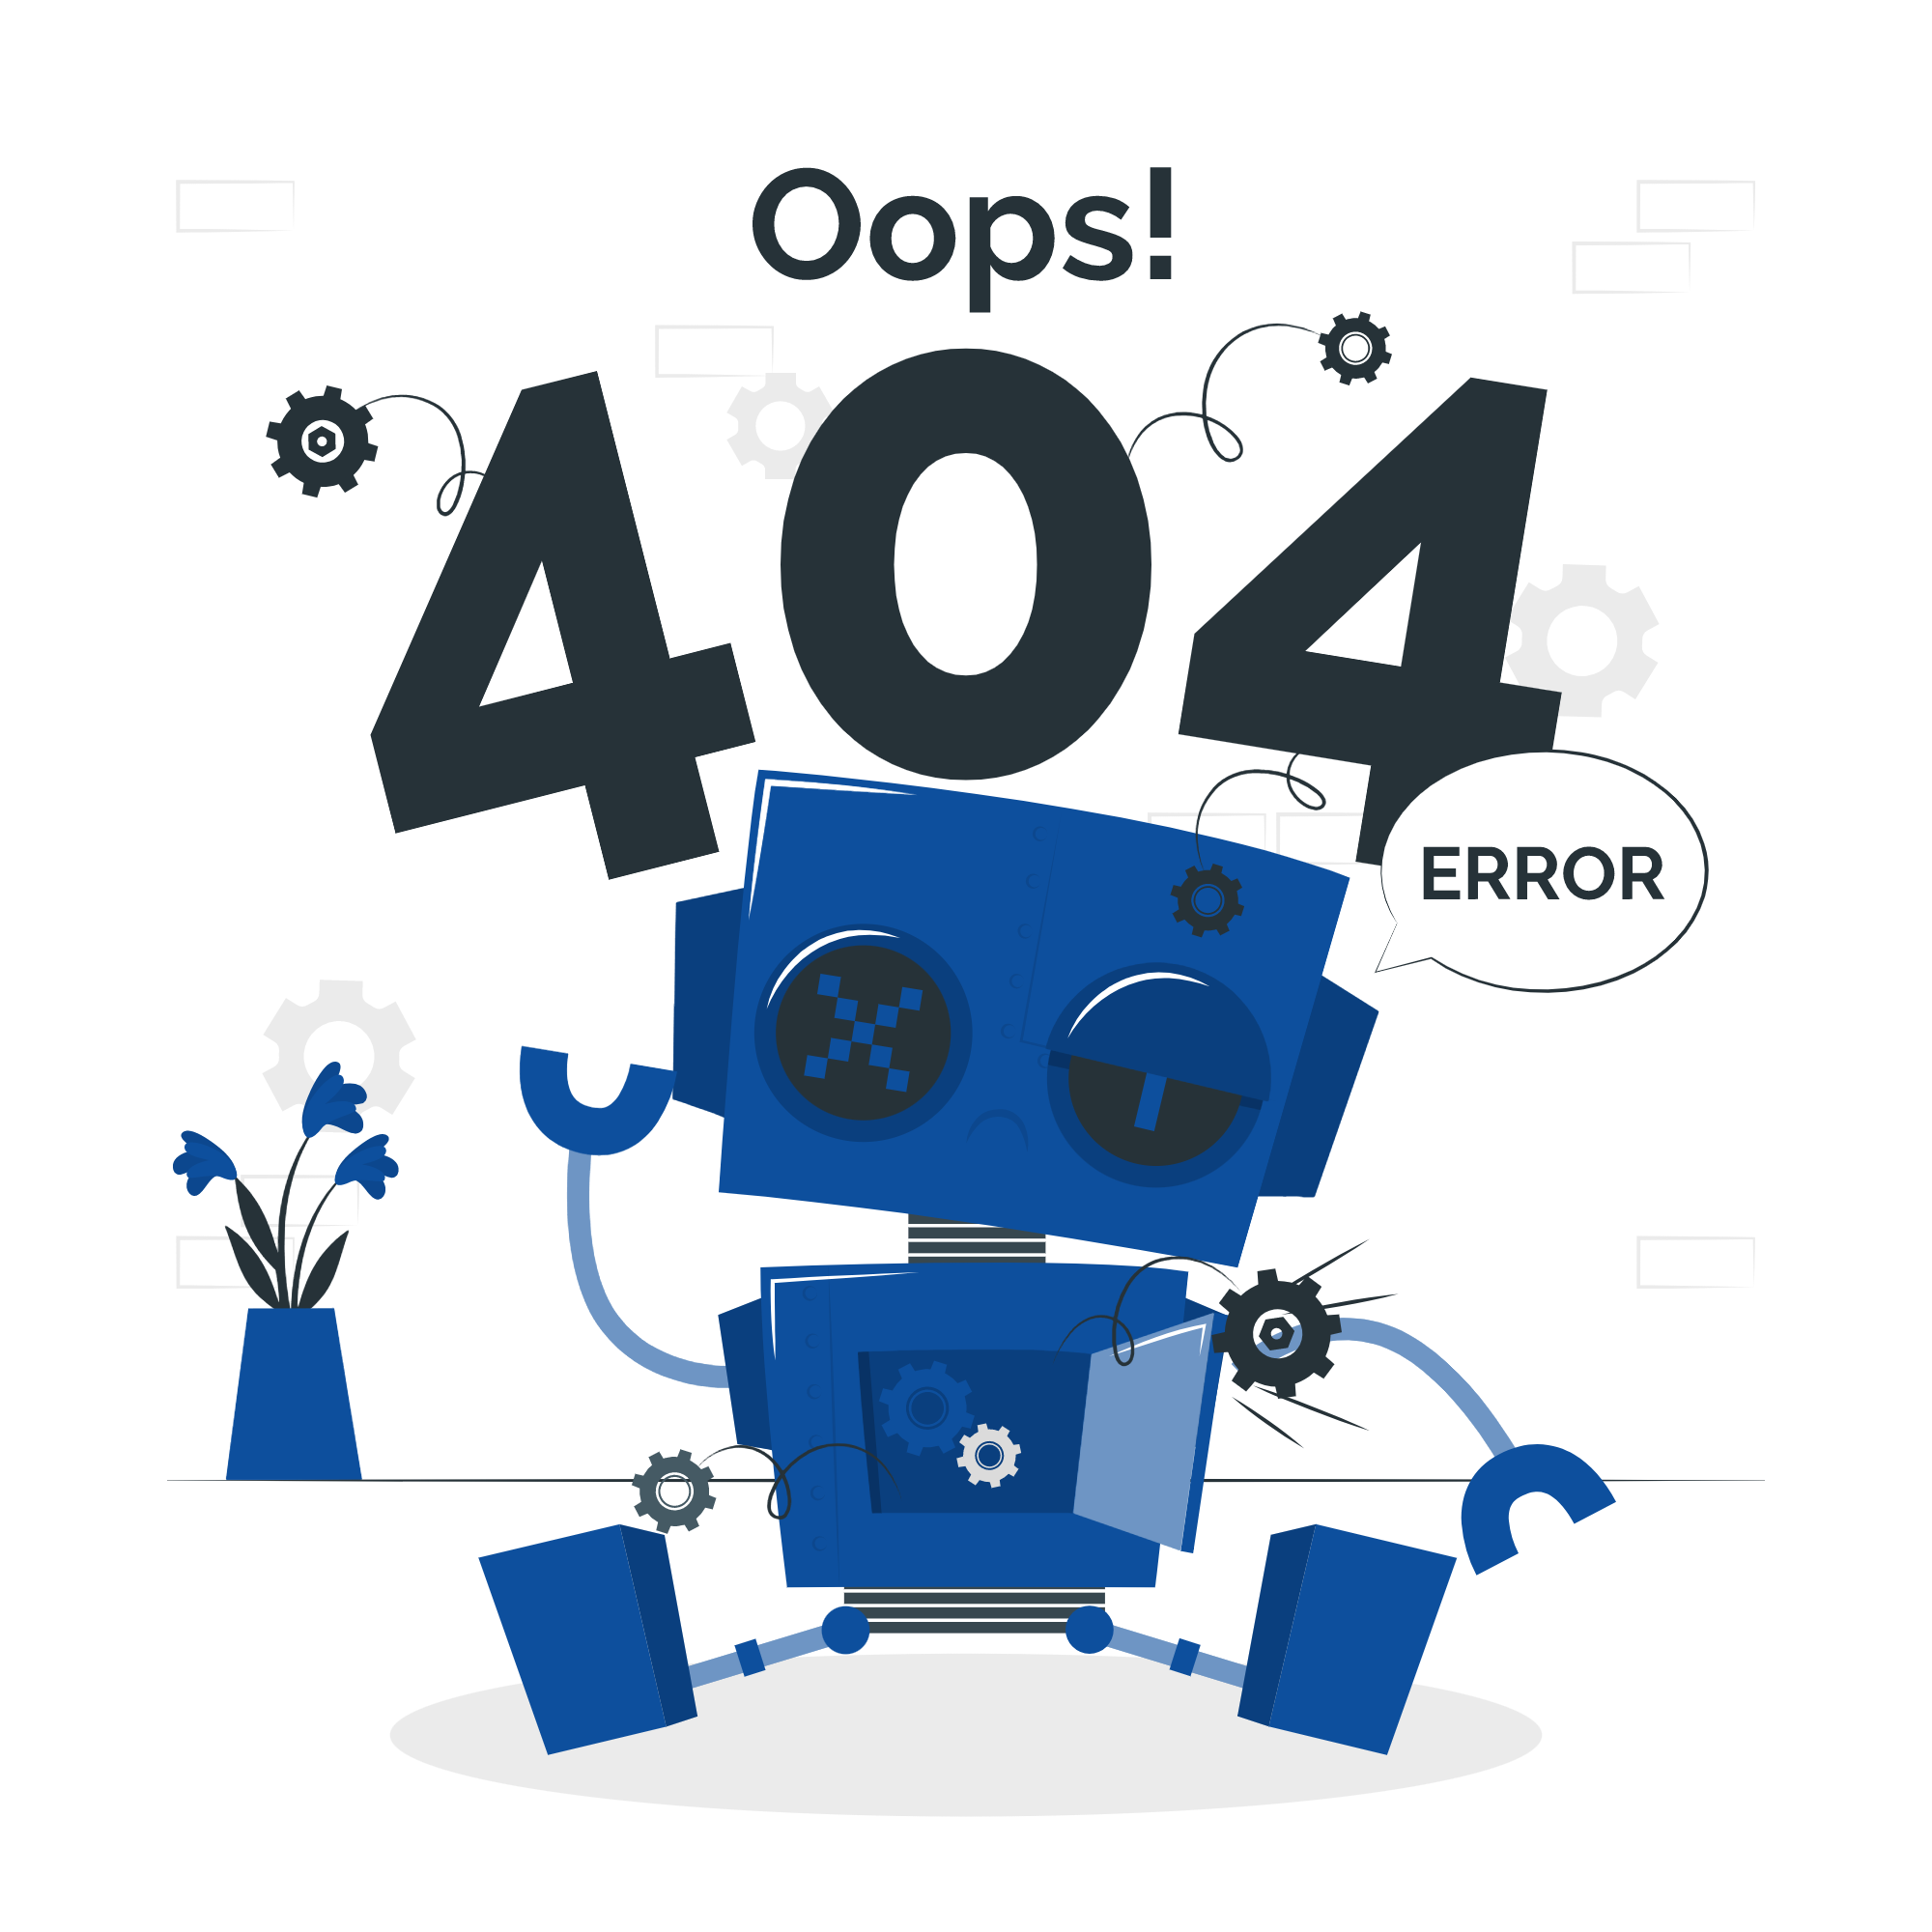 Oops! 404 Error with a broken robot-cuate